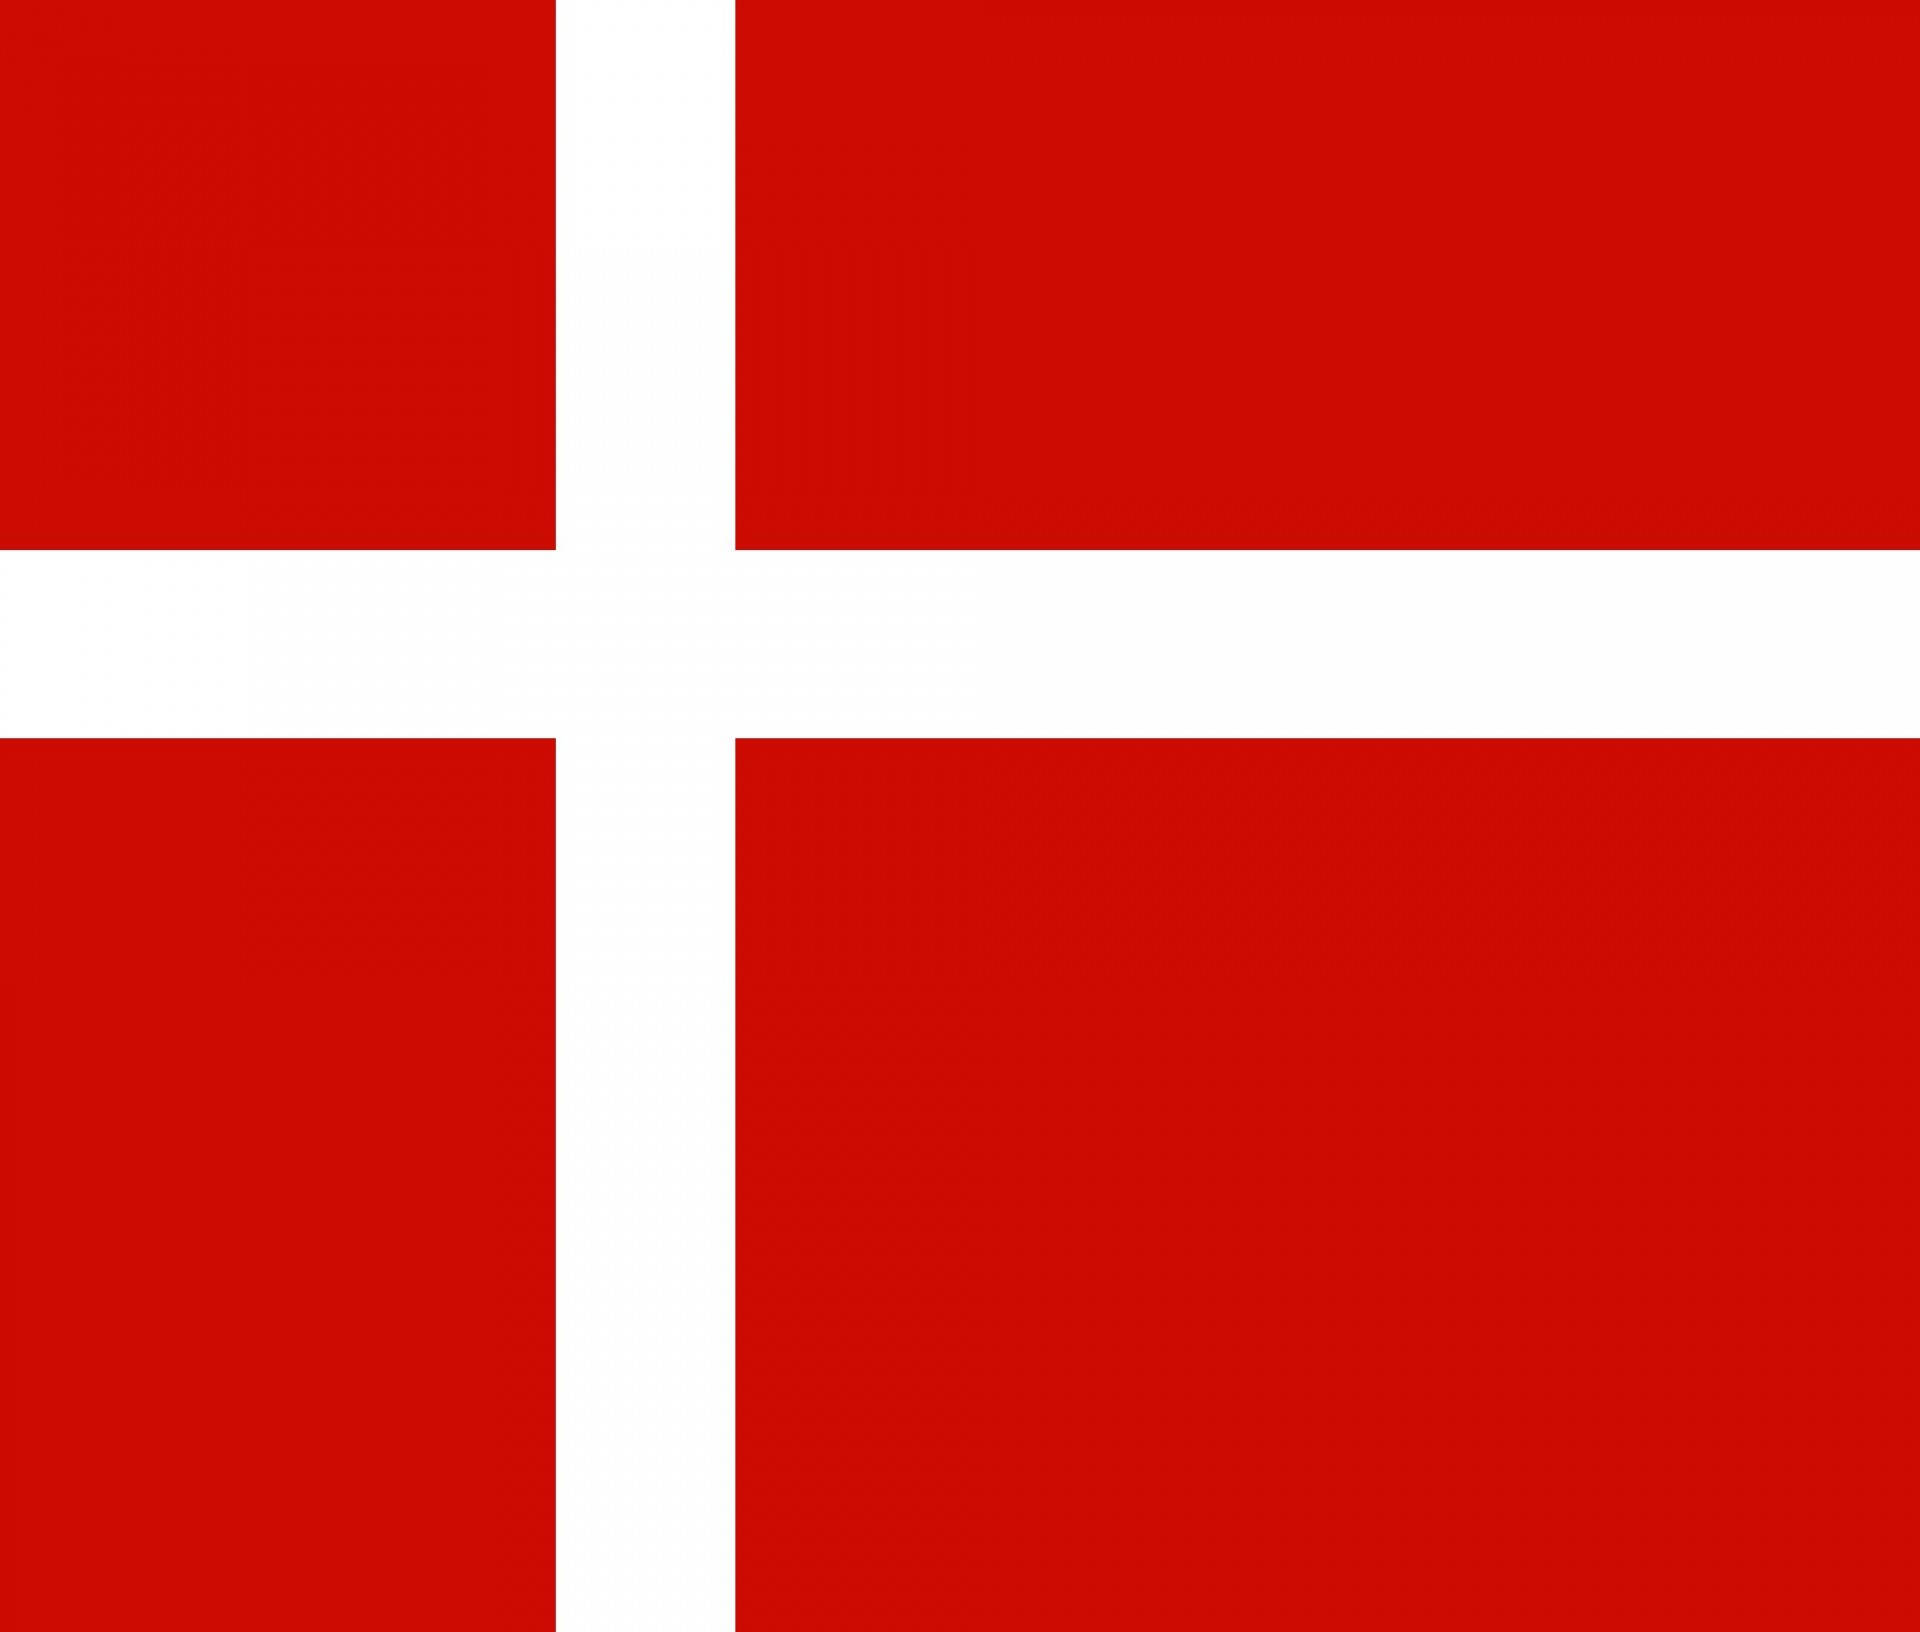 Danemarca flag